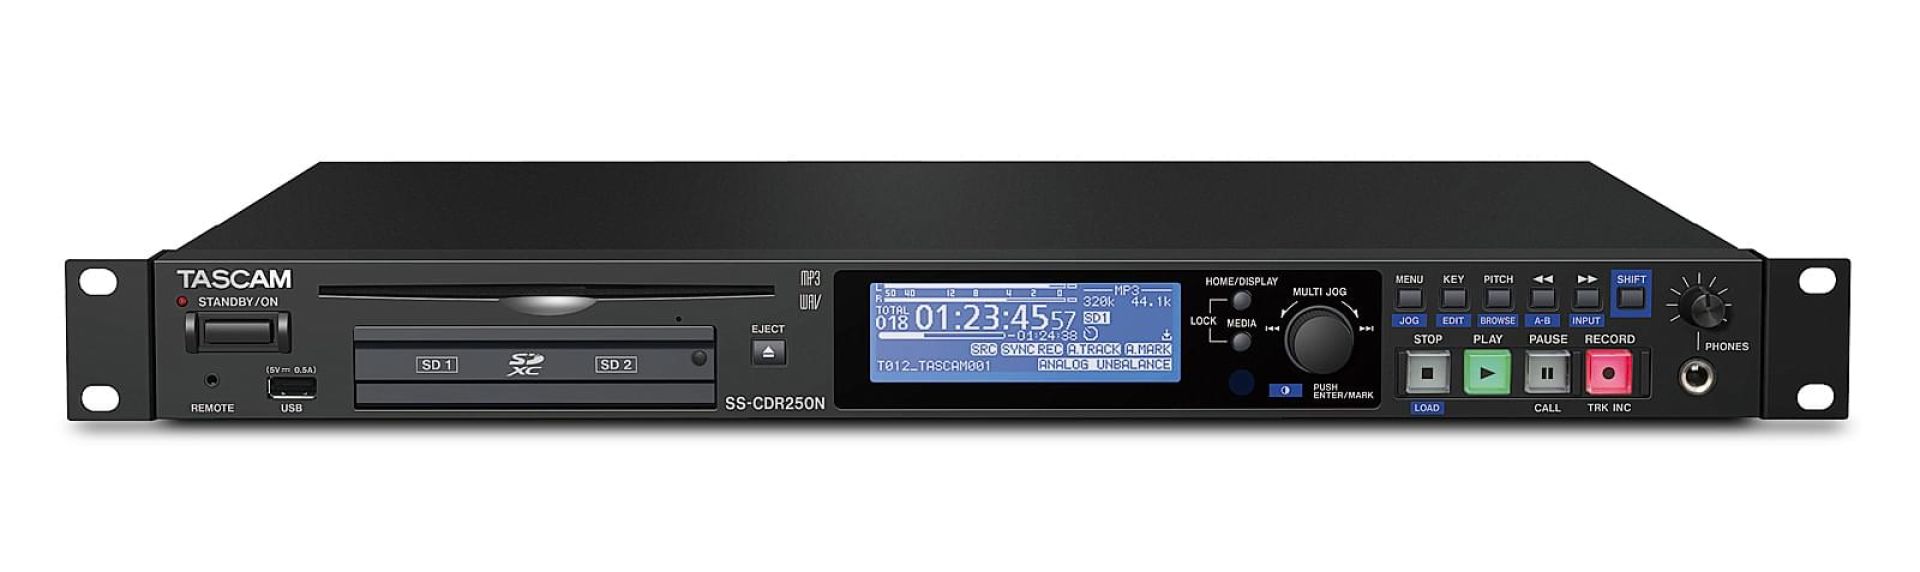 Tascam SS-CDR250N Media Player